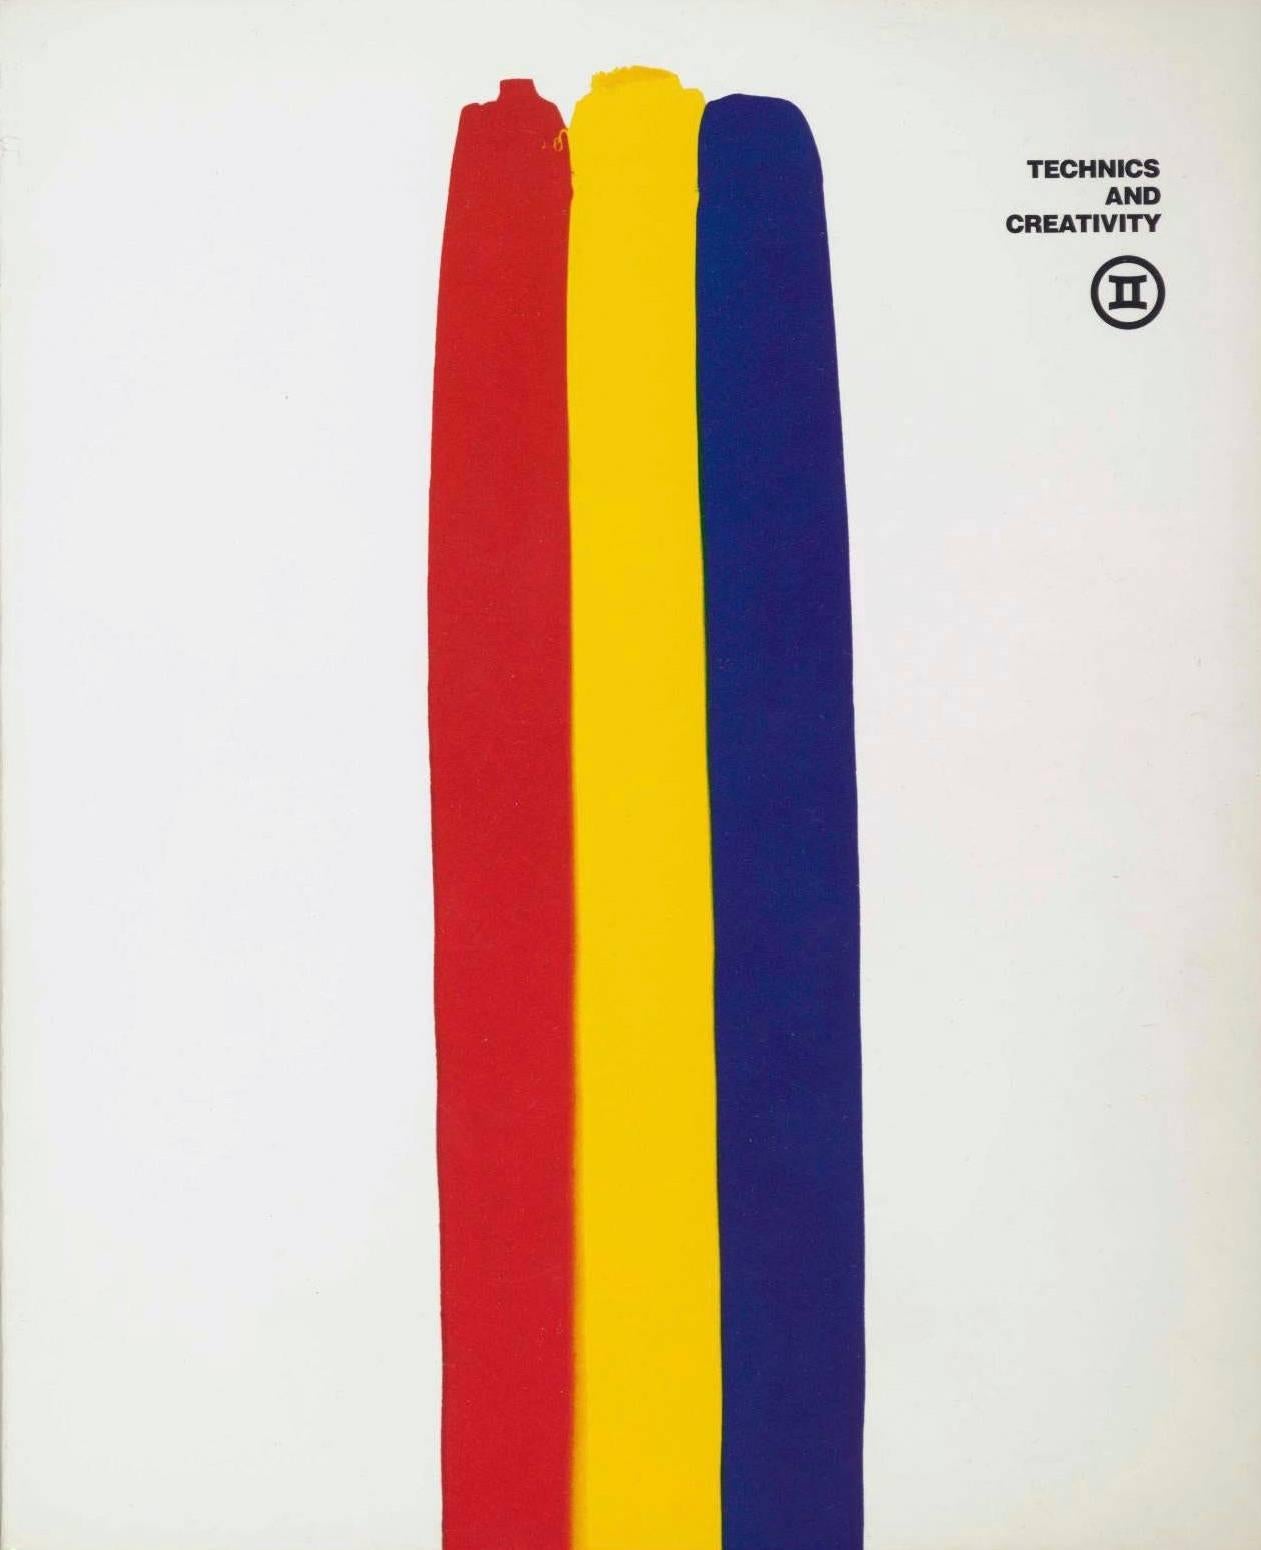 American Jasper Johns & Technics and Creativity ii Catalogue, Gemini G.E.L. & MoMa, 1971